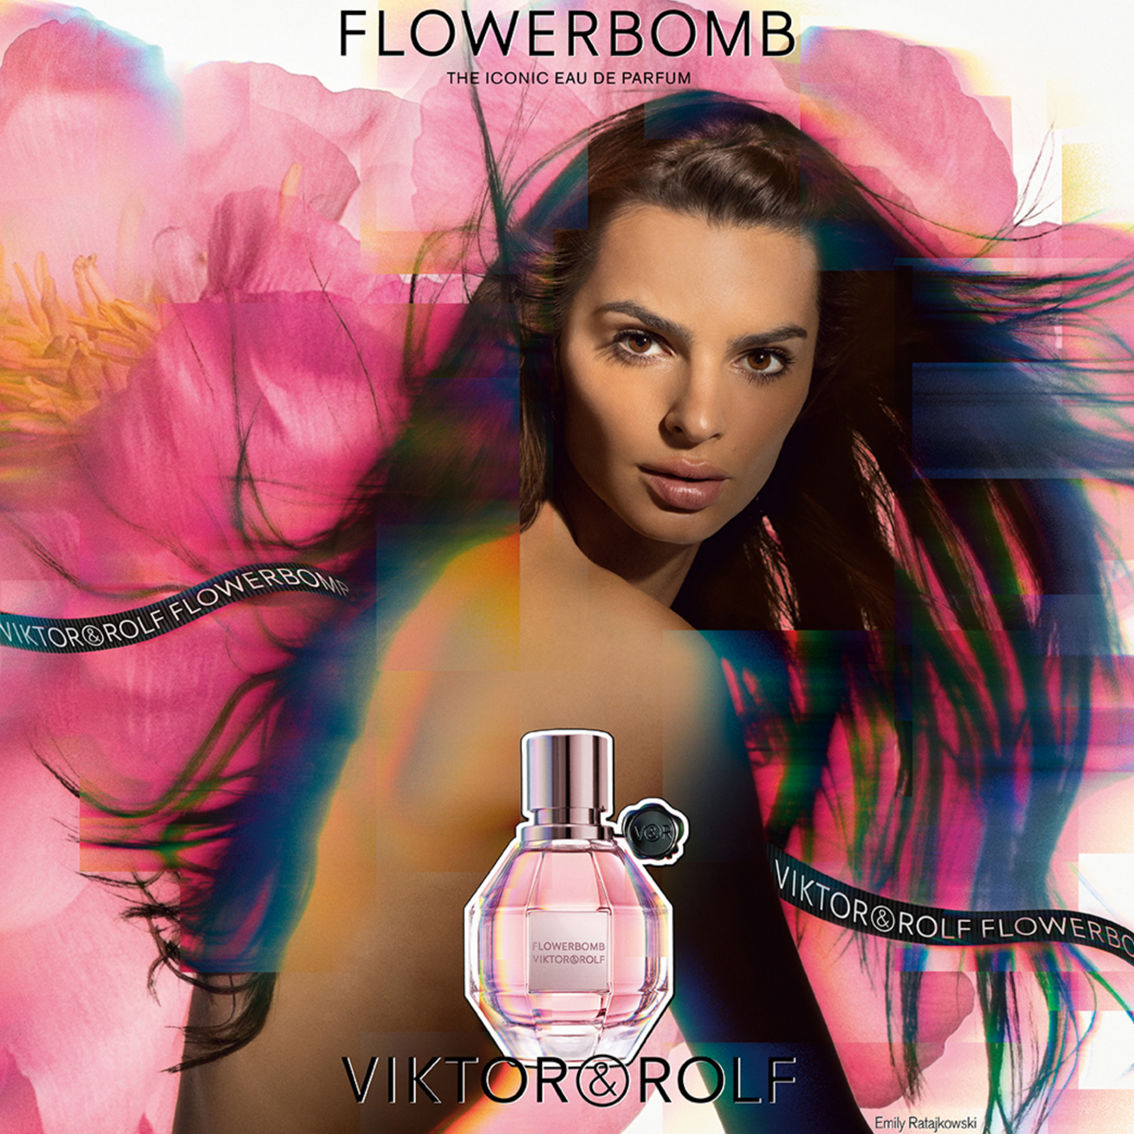 Viktor & Rolf Flowerbomb Eau de Parfum Spray - Image 4 of 4